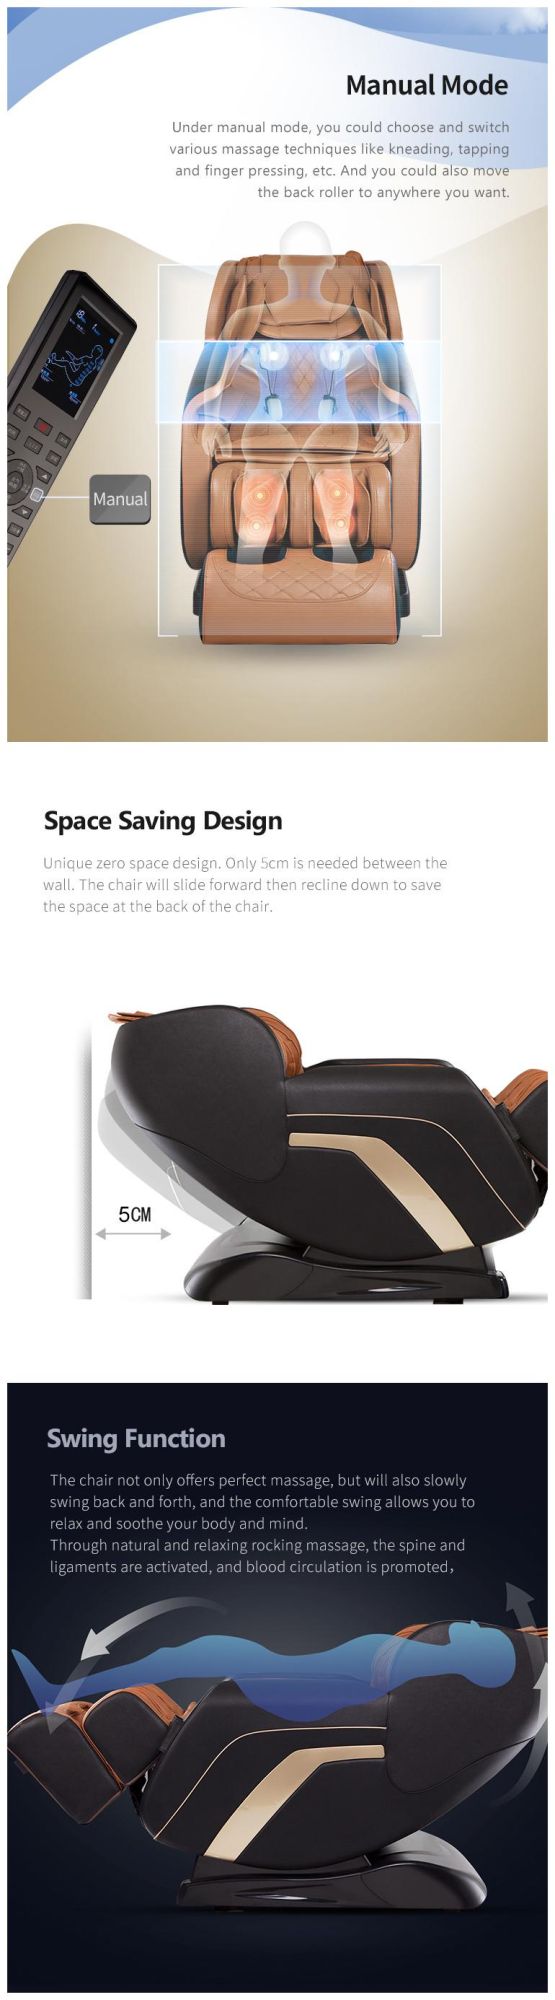 Wholesale 3D Zero Gravity Space Capsule Reclining Massage Chair Price